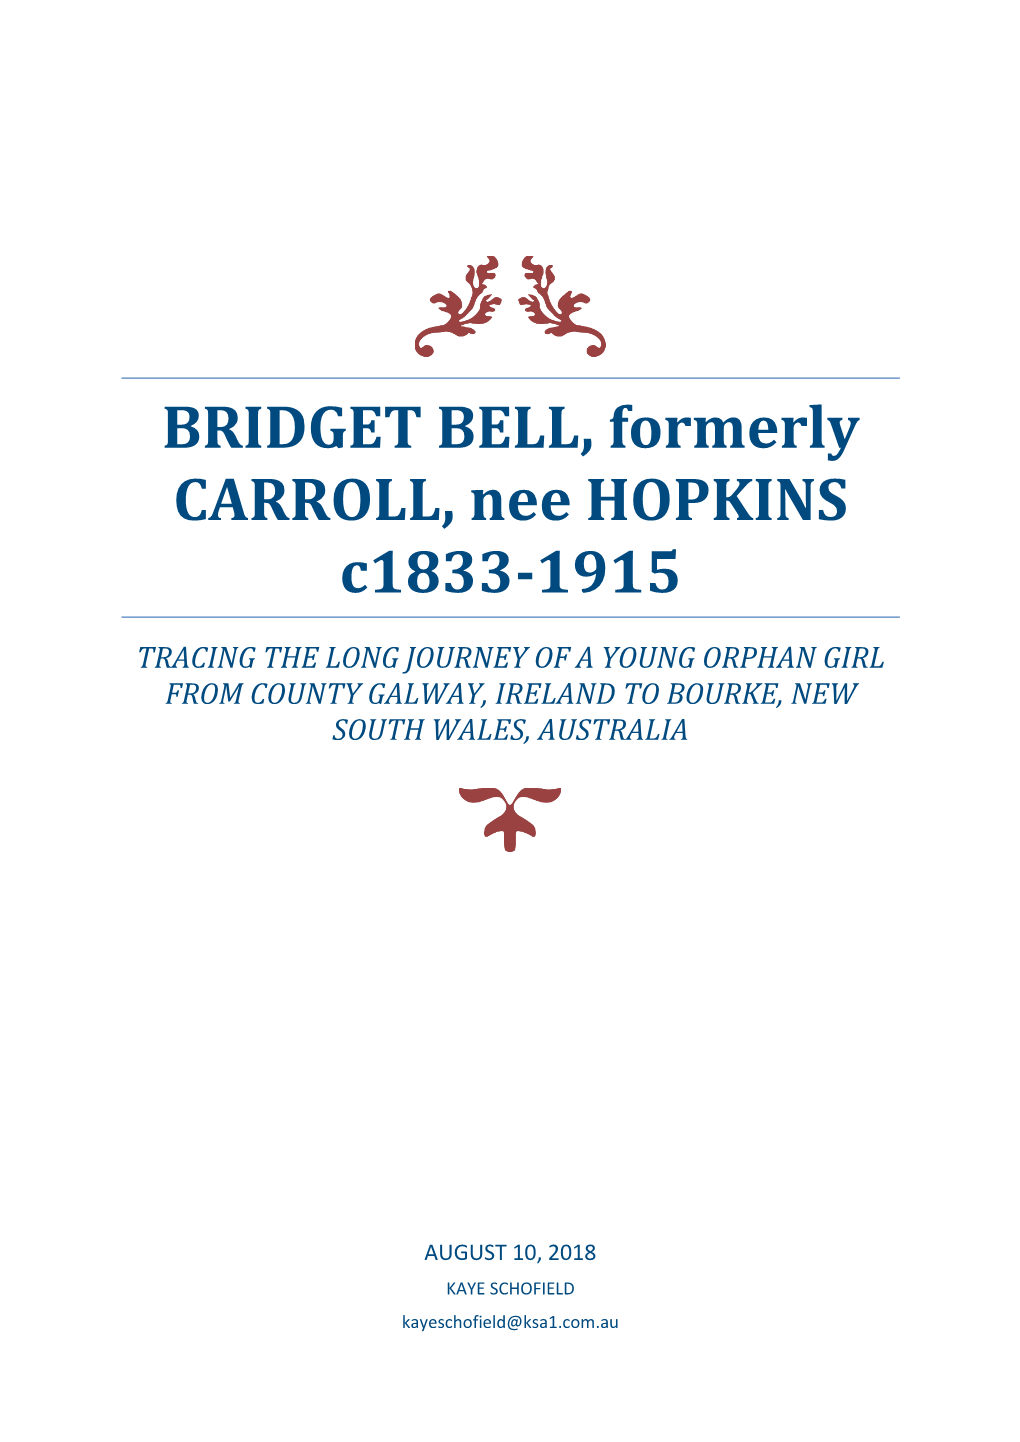 BRIDGET BELL, Formerly CARROLL, Nee HOPKINS C1833-1915